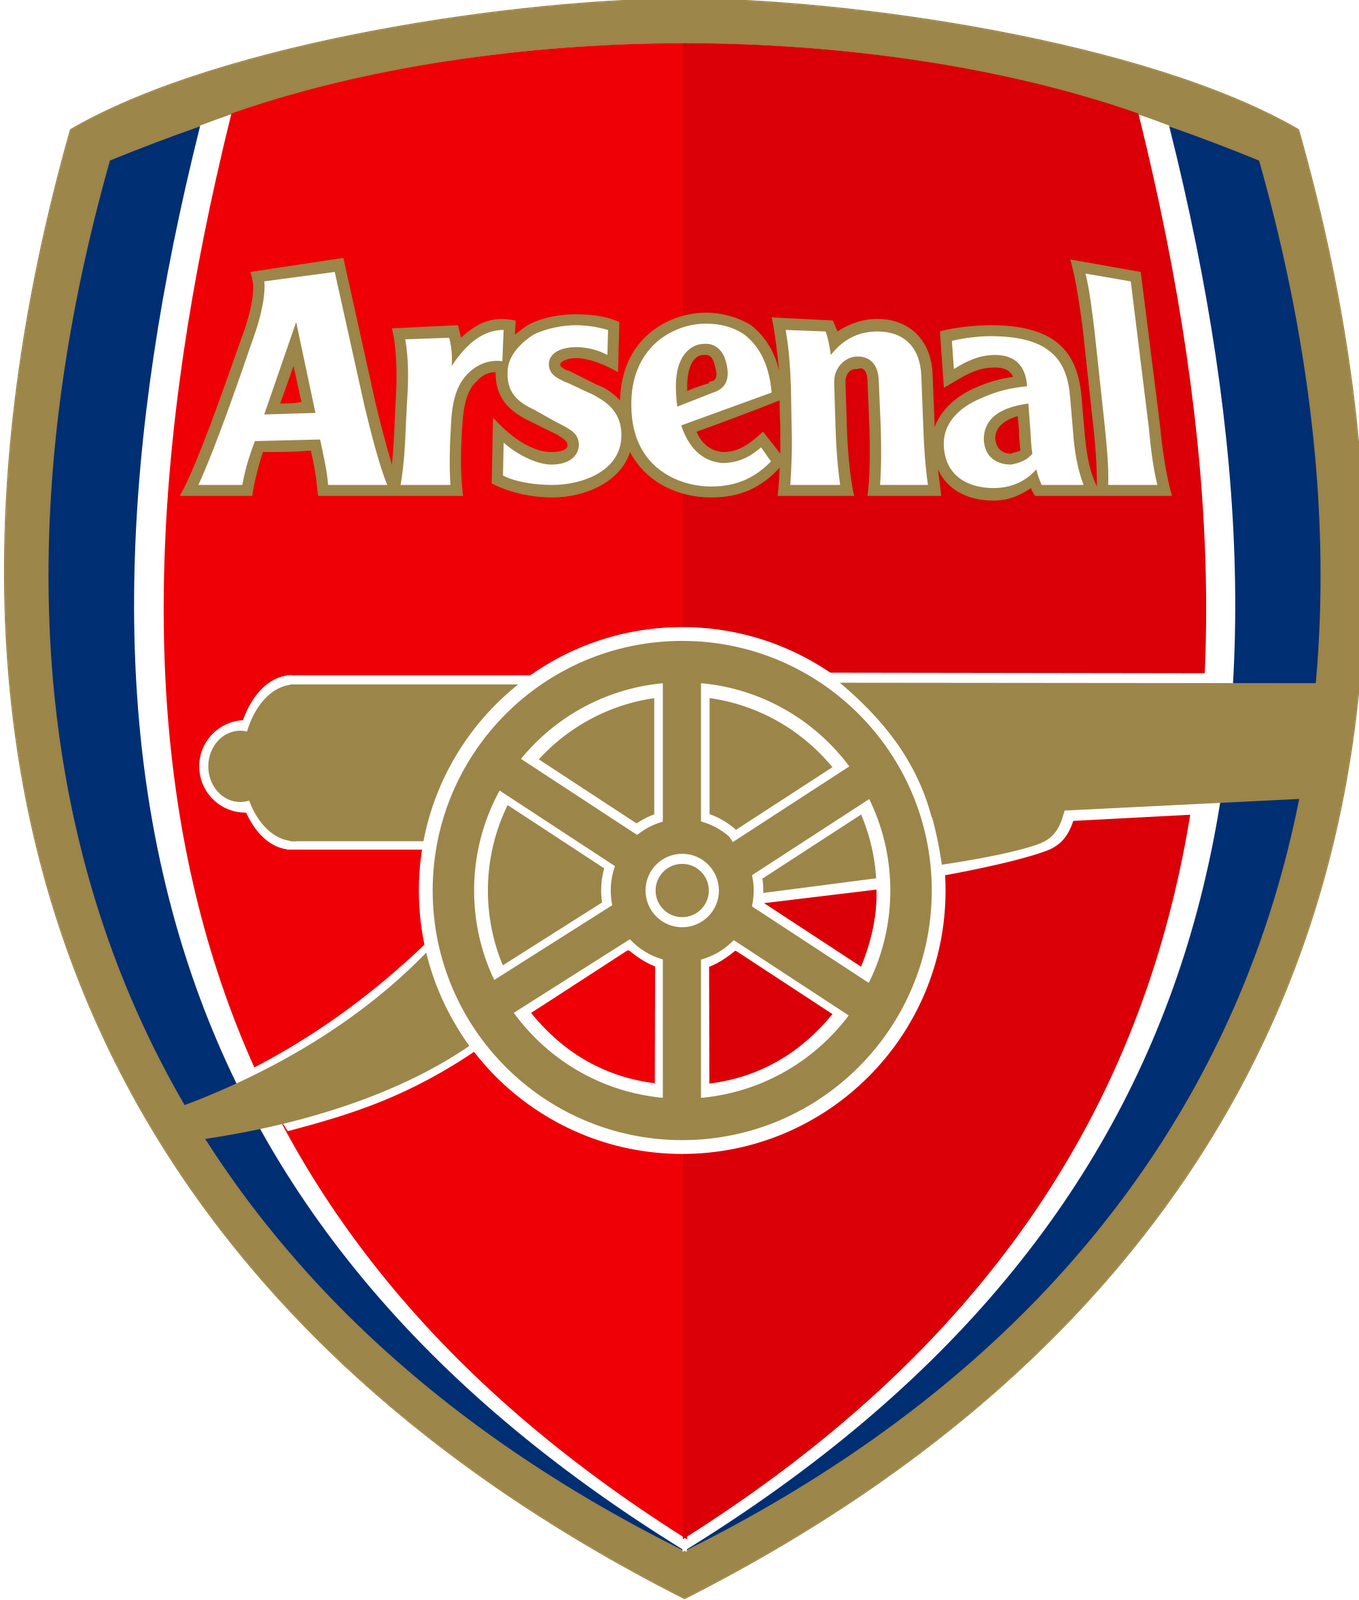 Arsenal FC, London